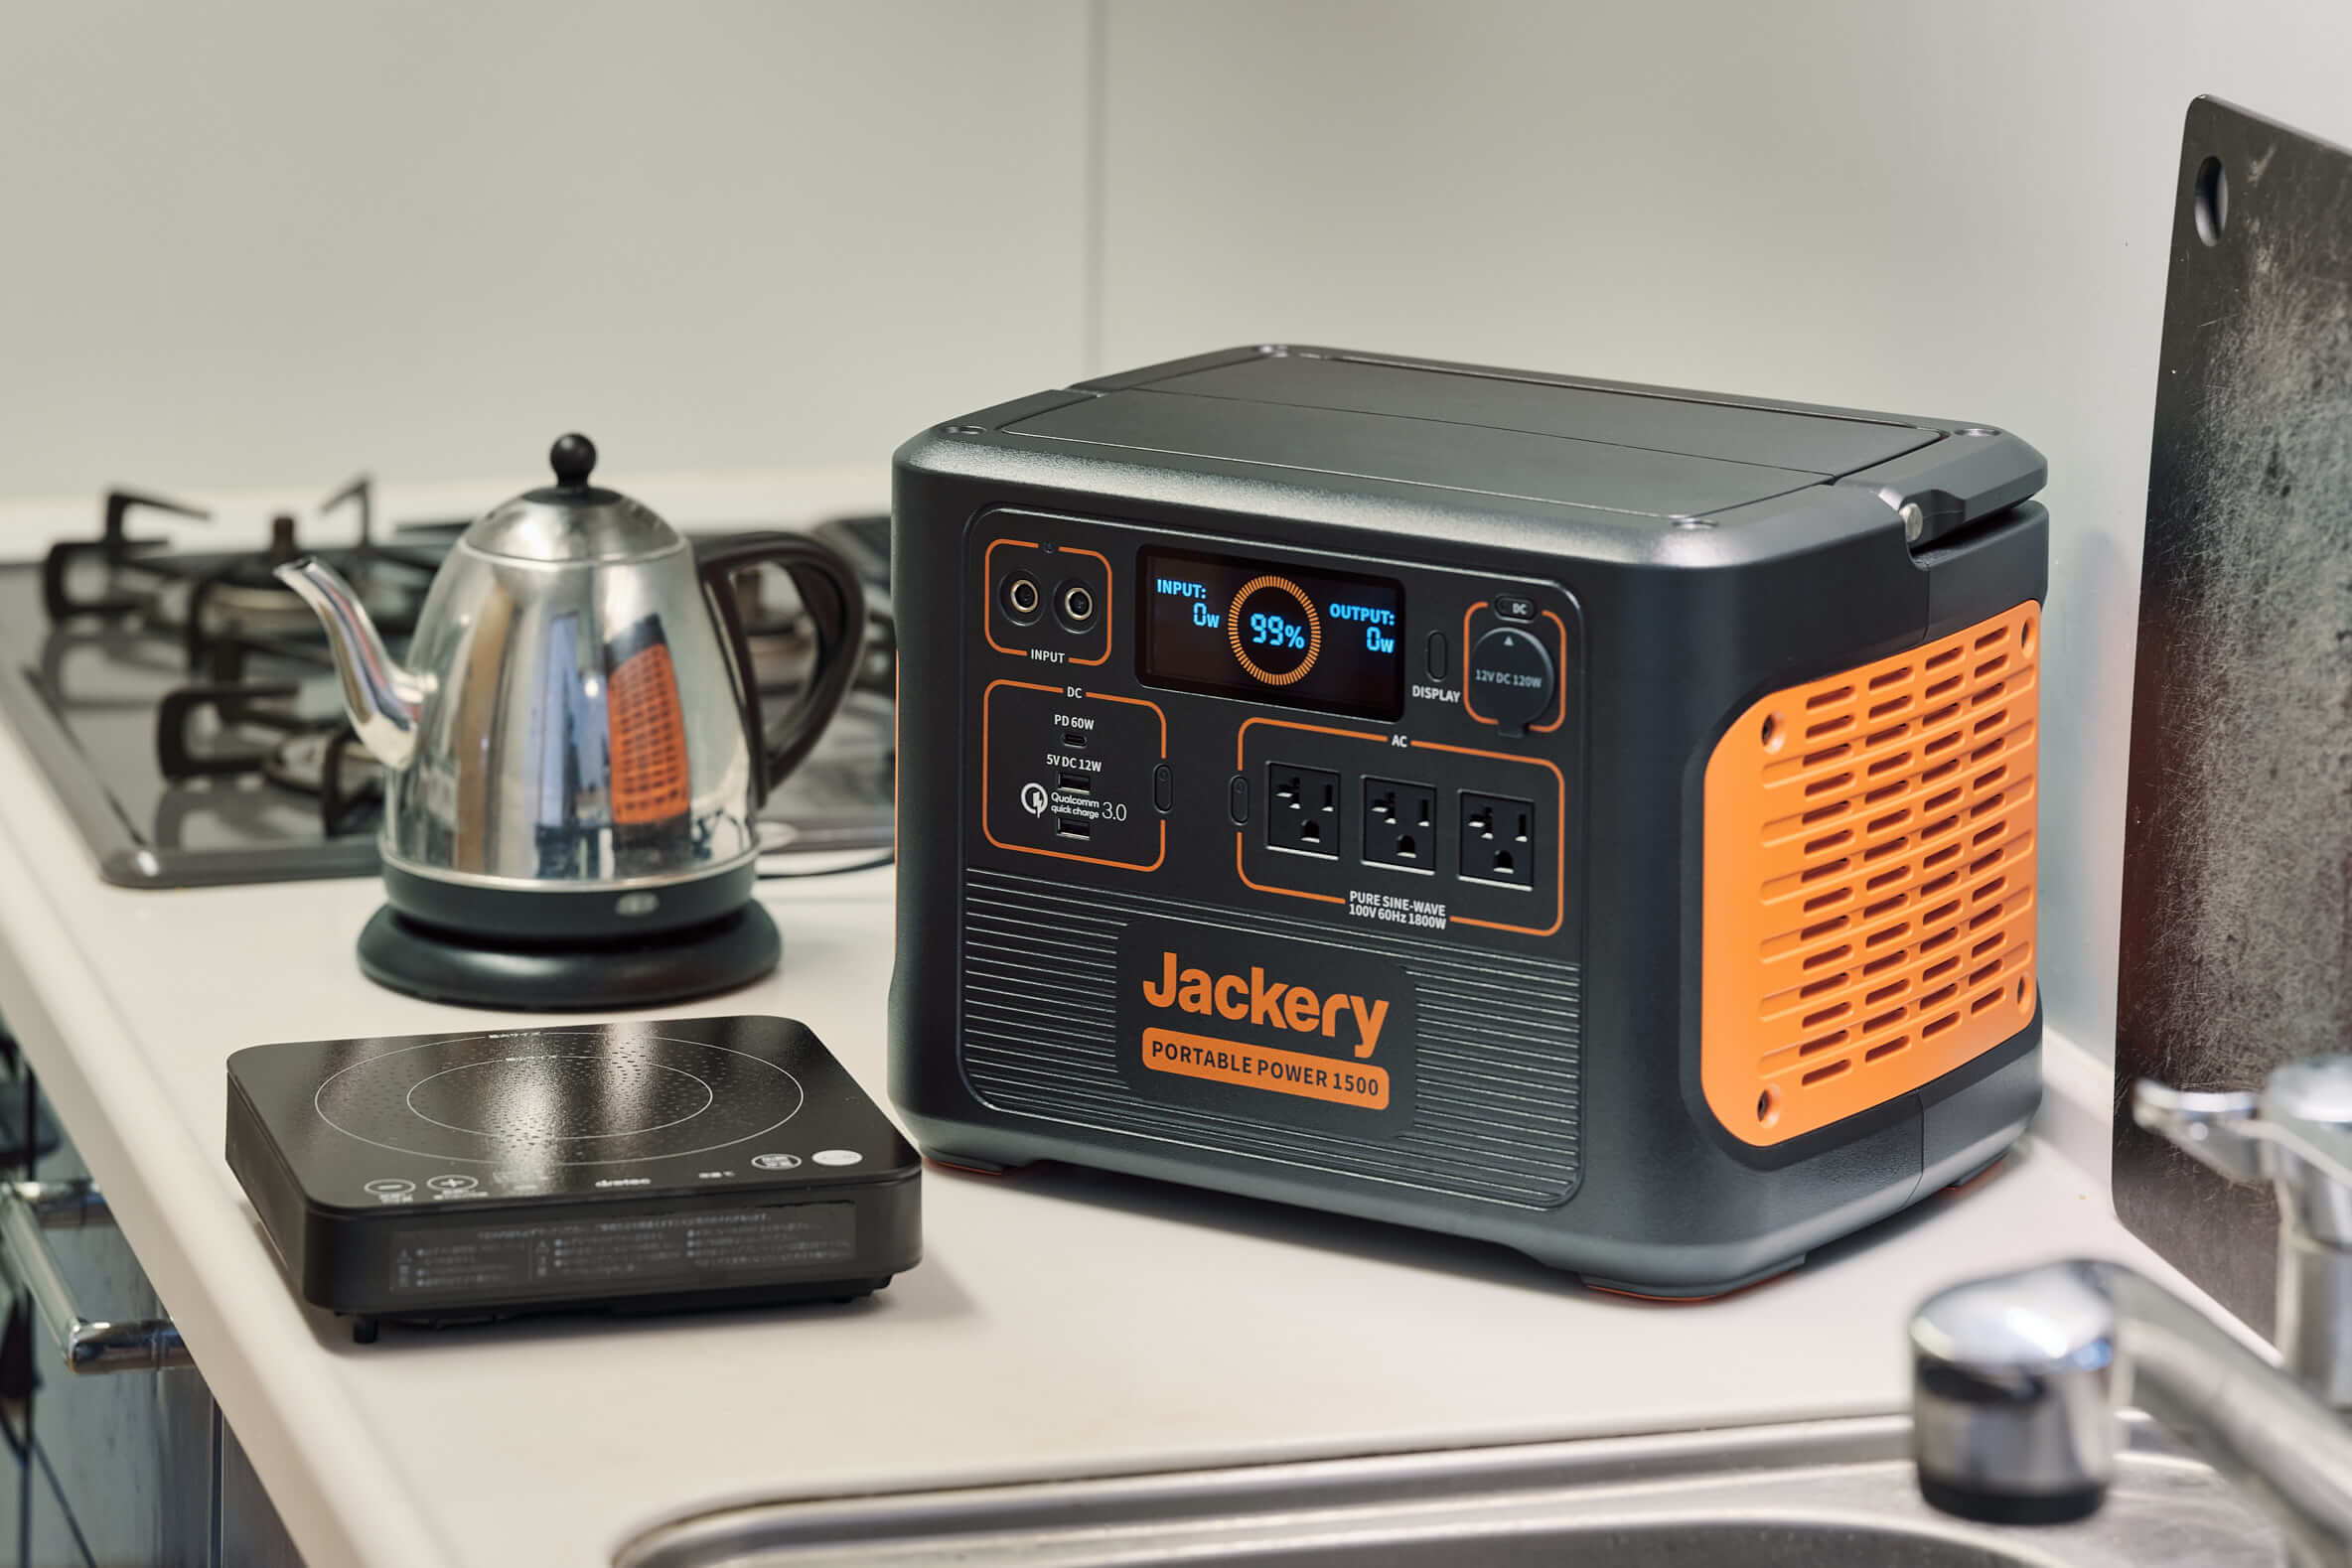 Jackeryポータブル電源1500はIHコンロや電気ケトルなども稼働